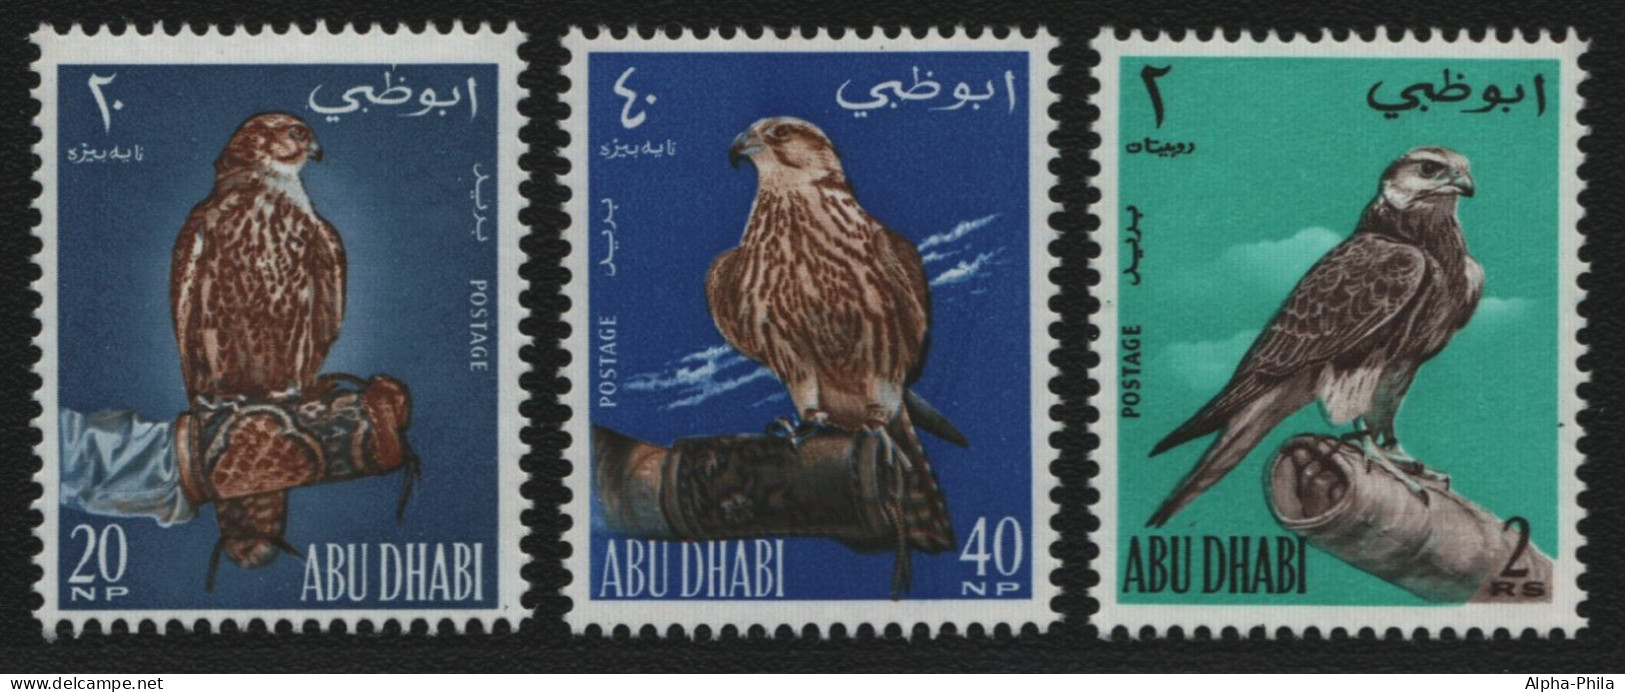 Abu Dhabi 1965 - Mi-Nr. 12-14 ** - MNH - Vögel / Birds - Abu Dhabi